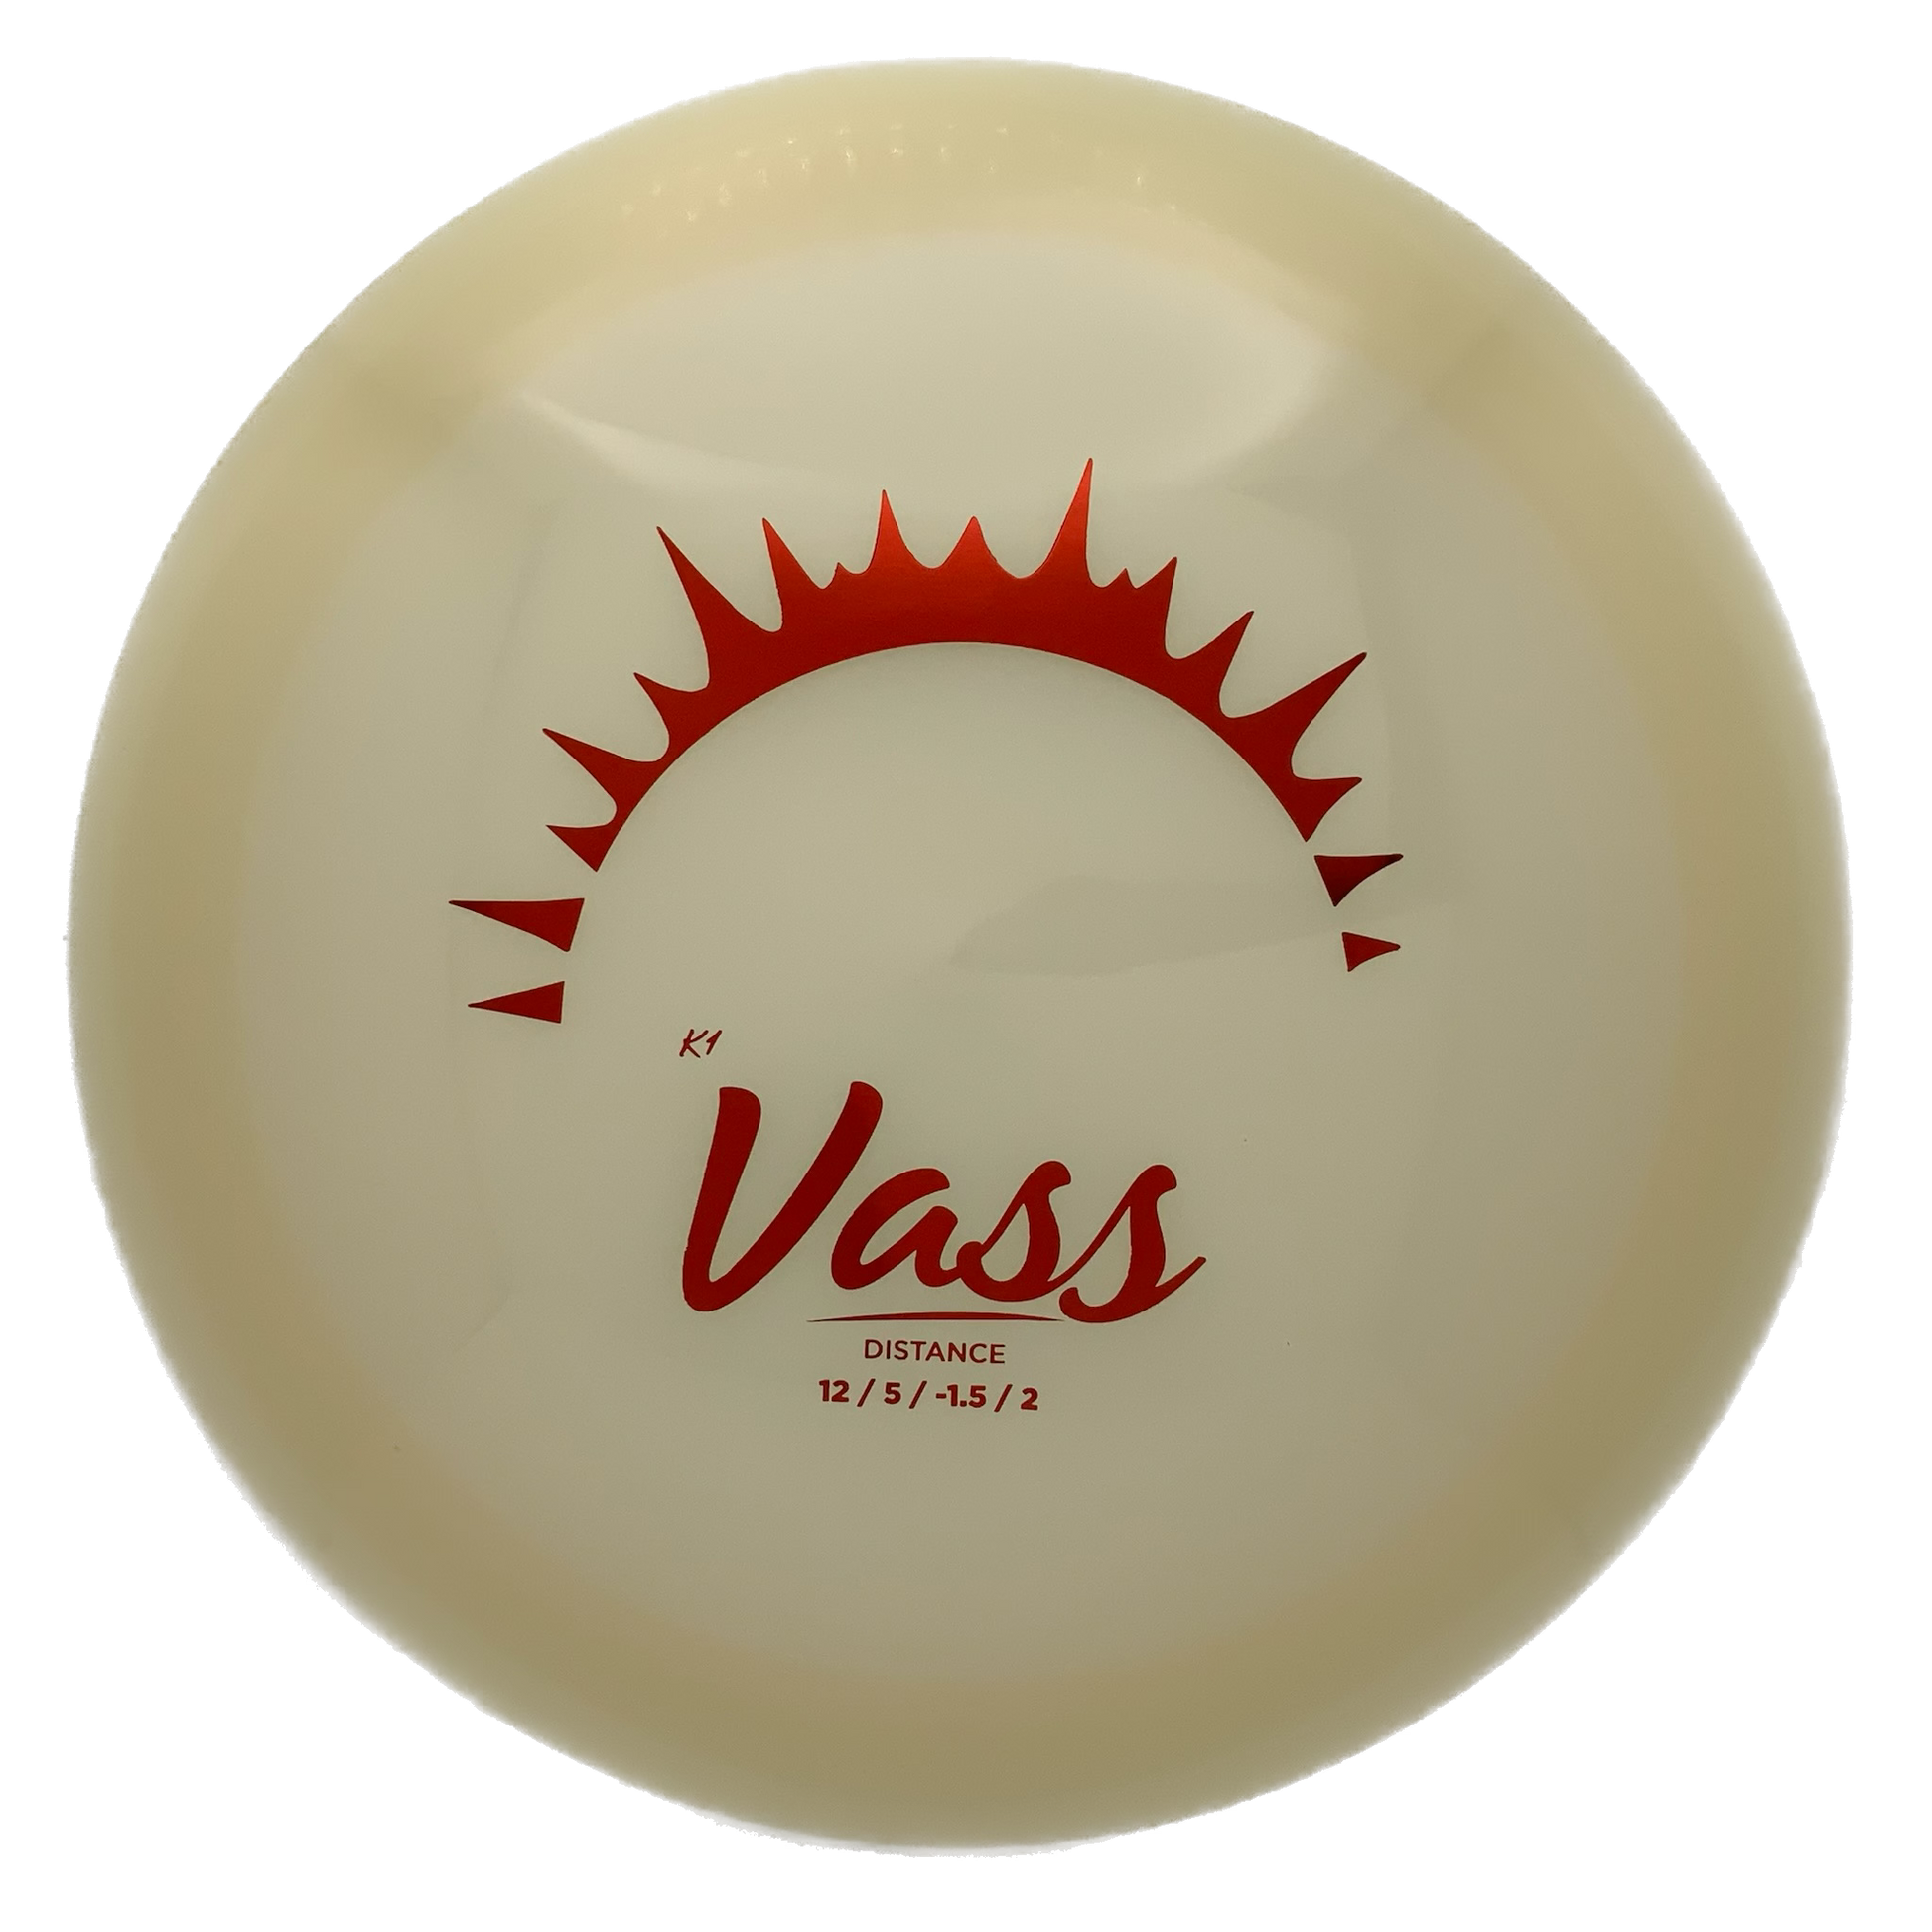 Kastaplast Glow Vass - Astro Discs TX - Houston Disc Golf